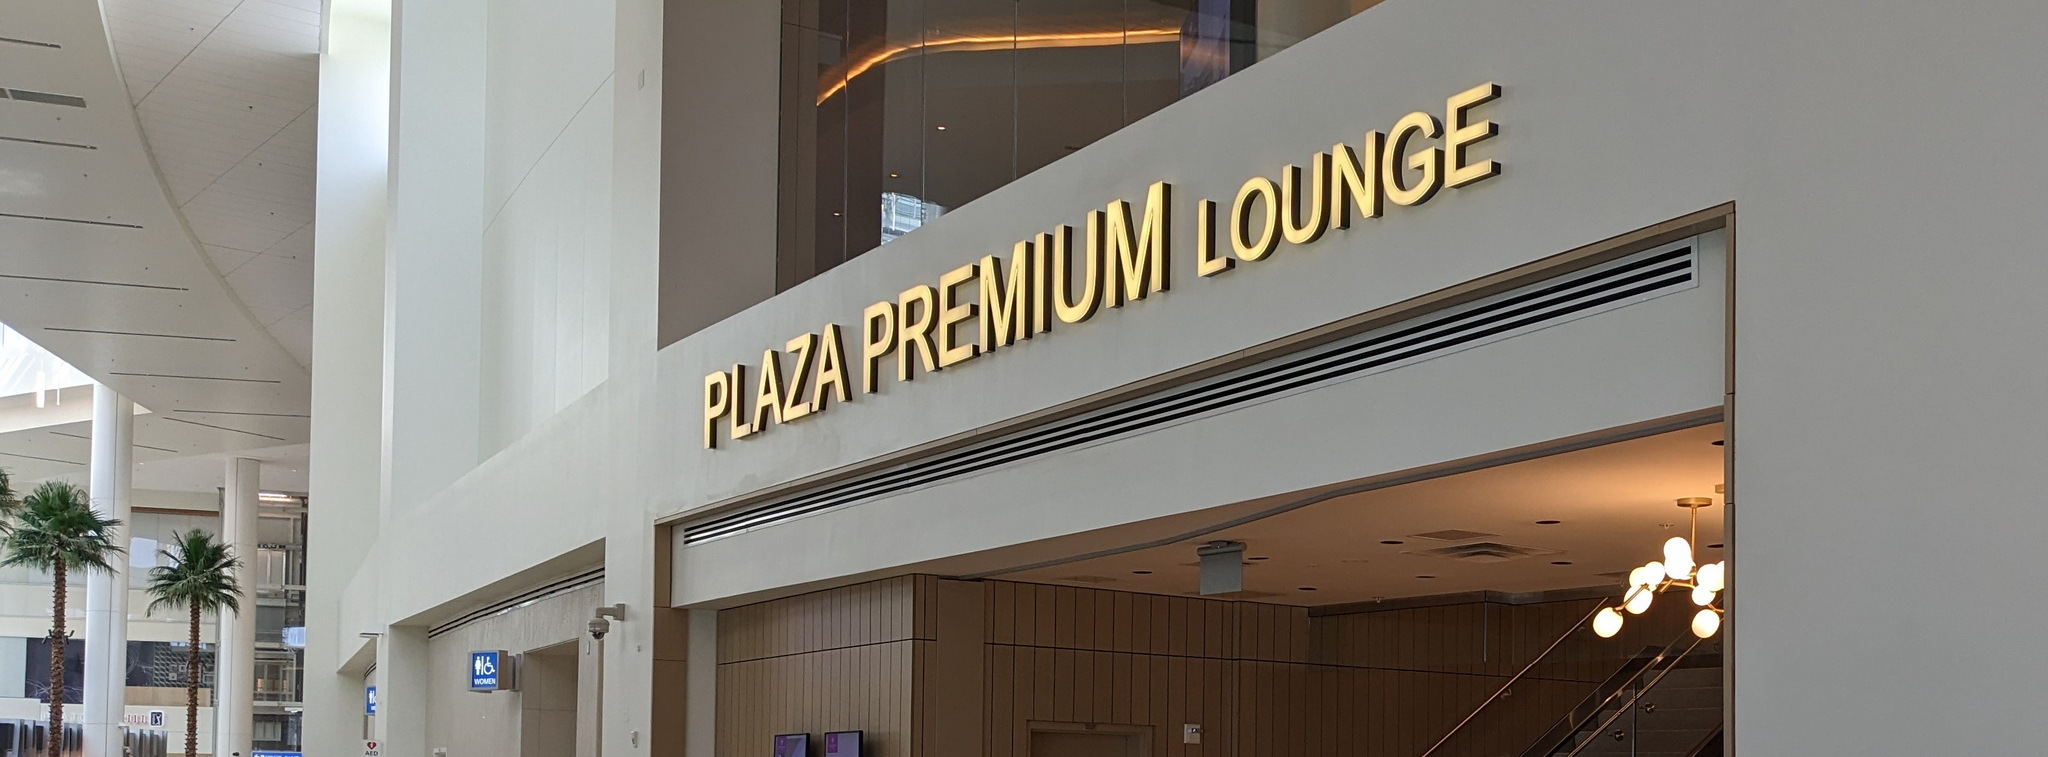 Entrance to Plaza Premium Lounge in Orlando